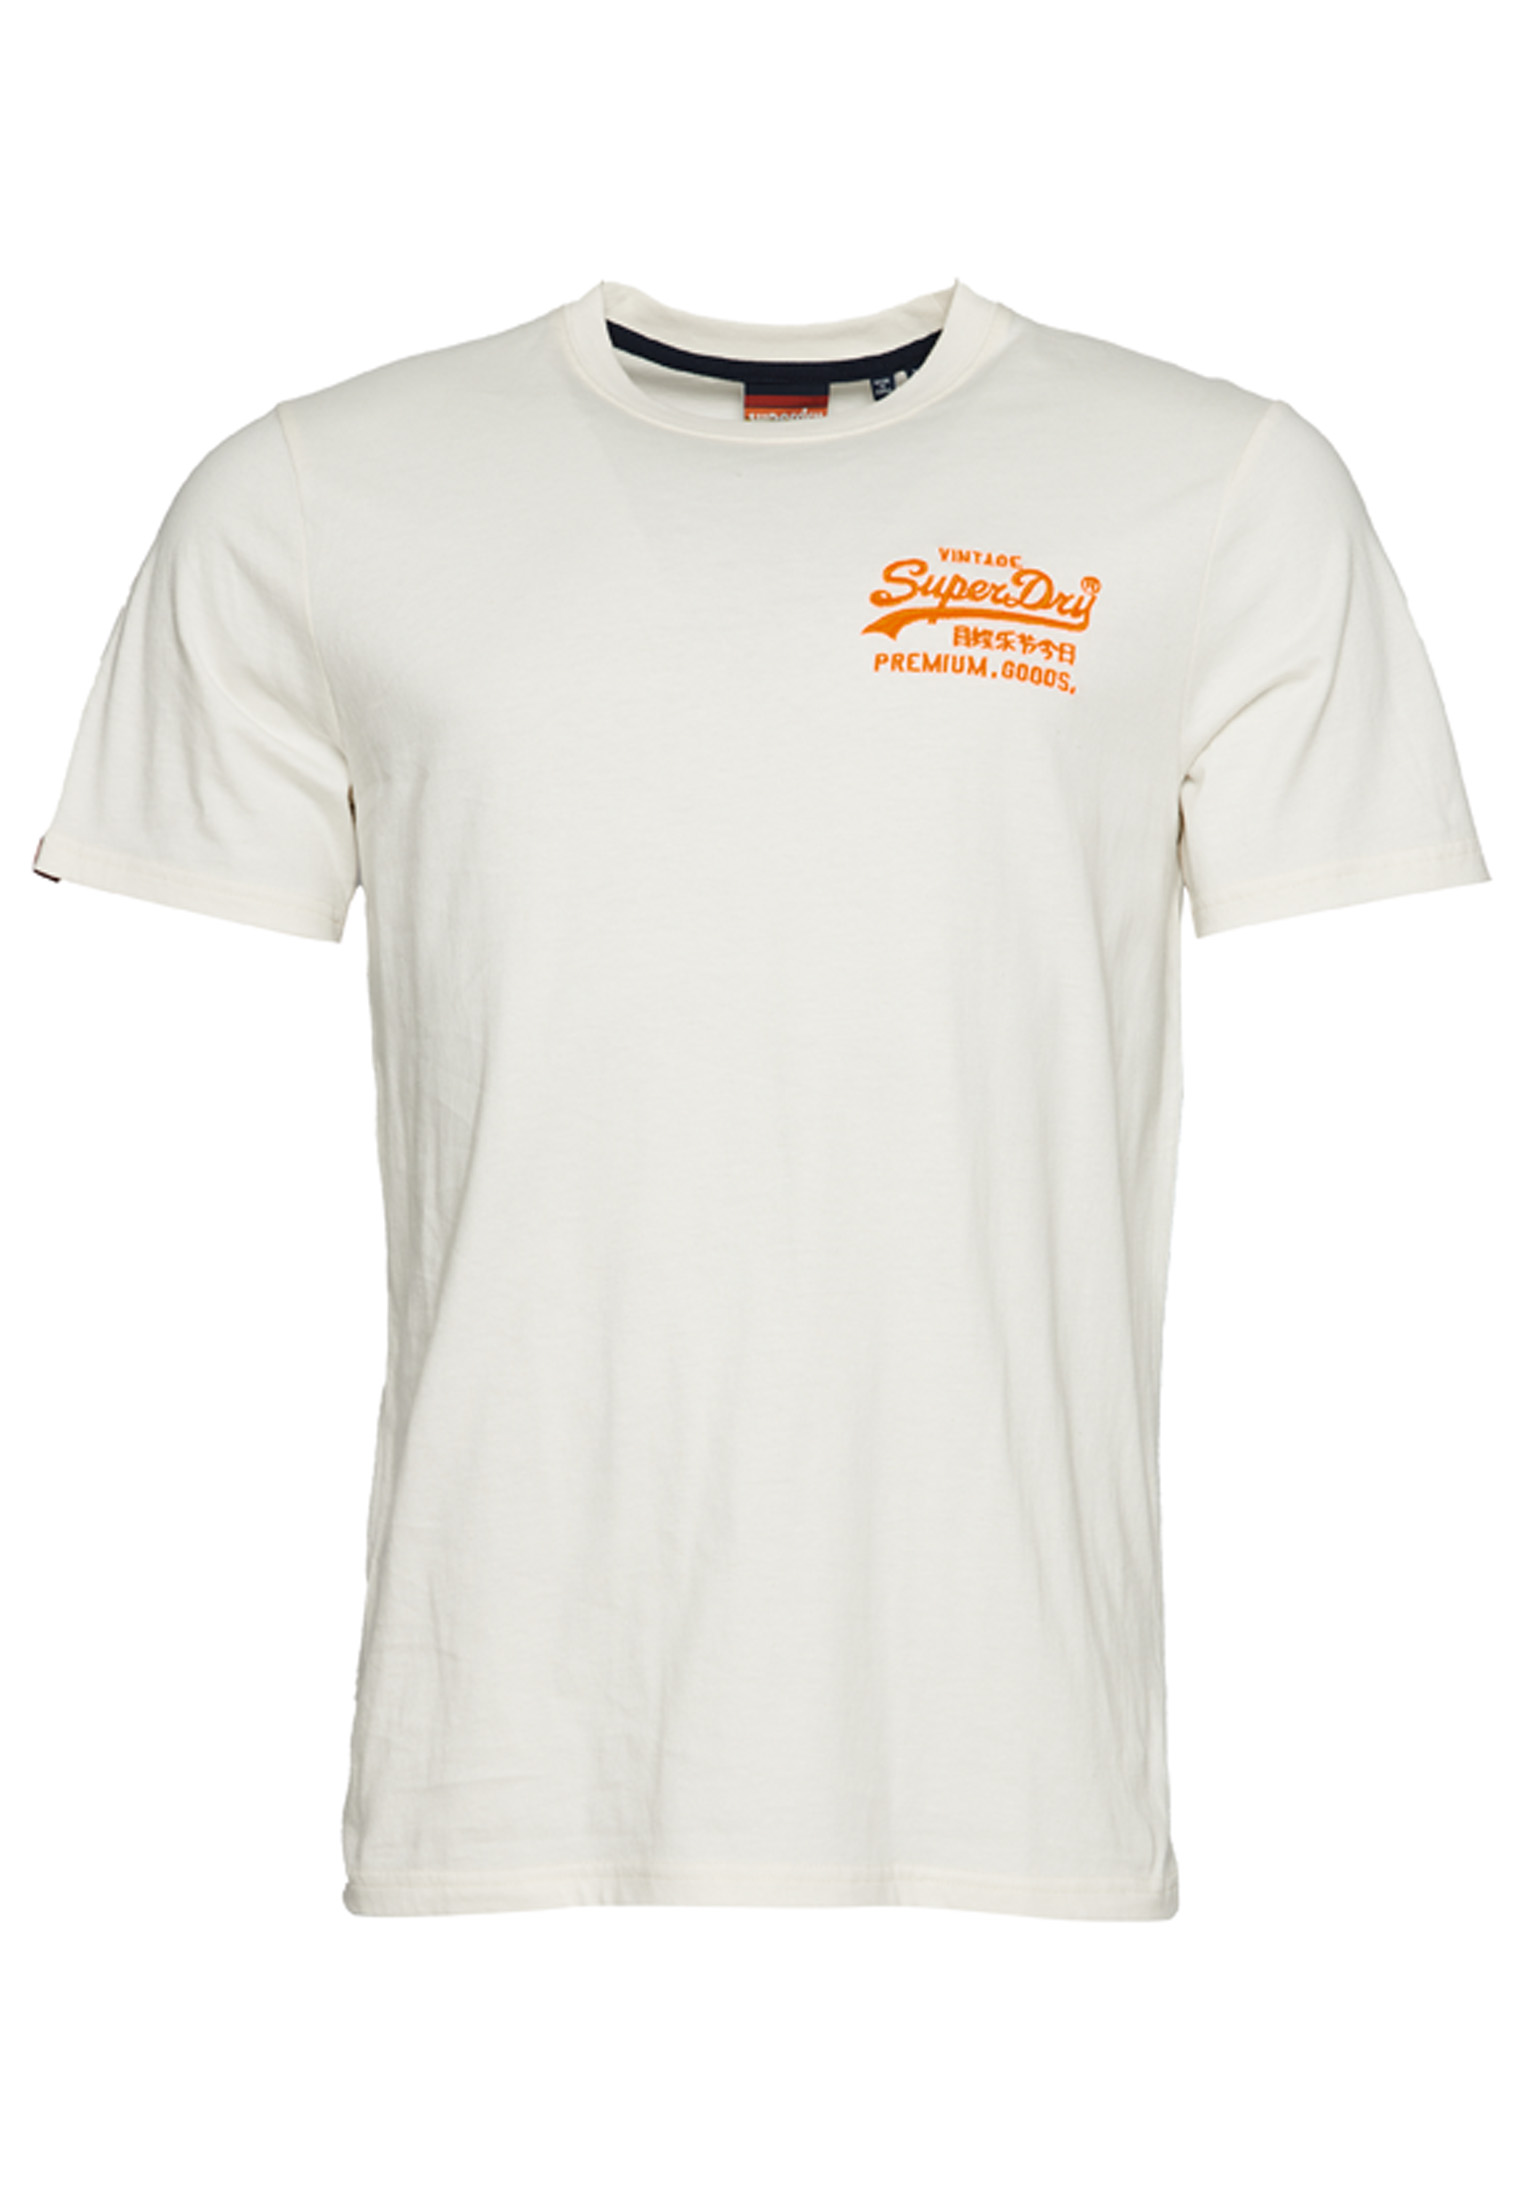 Superdry Mens Vintage Logo Neon T-Shirt | eBay